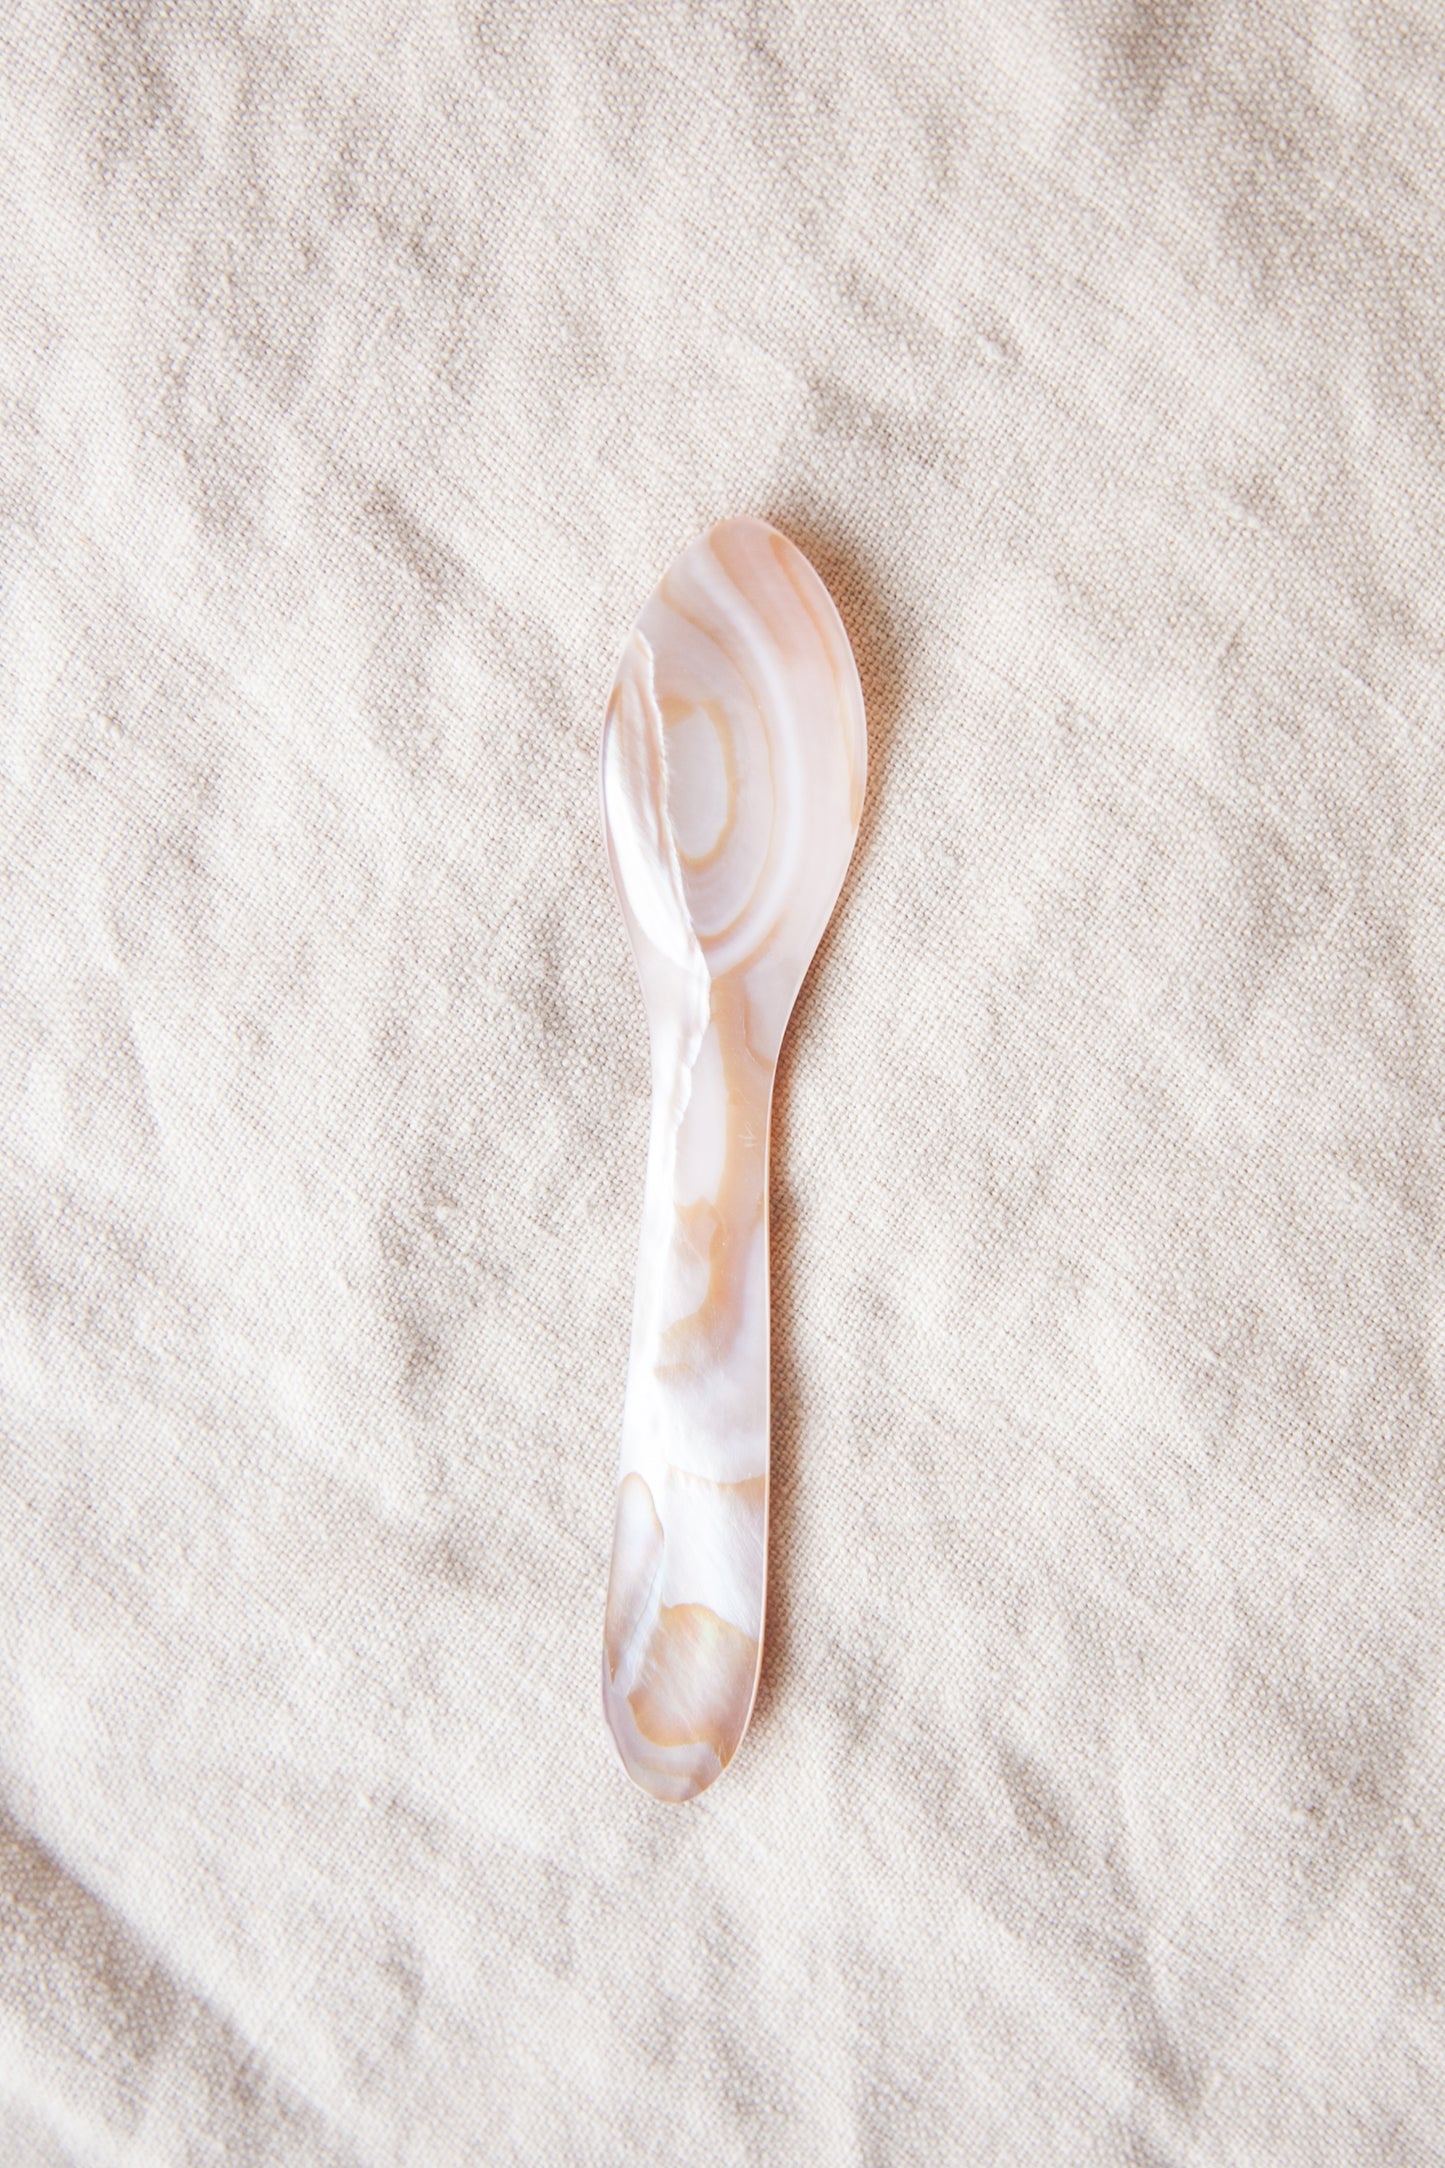 Seashell Dessert Spoon